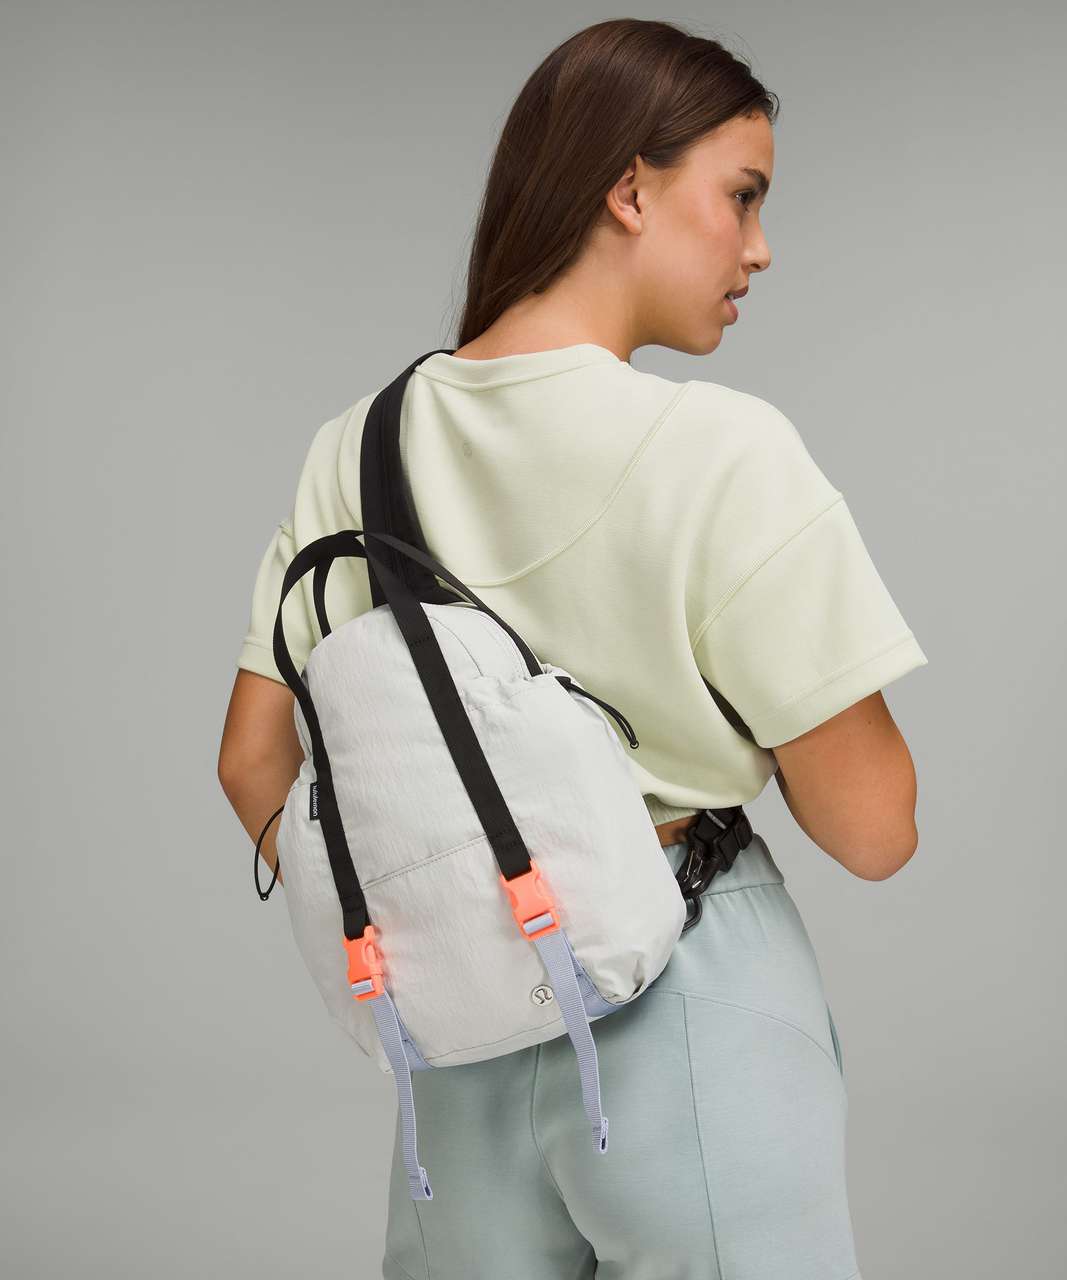 Lululemon Pack and Go Multi Wear Bag - Vapor / Black